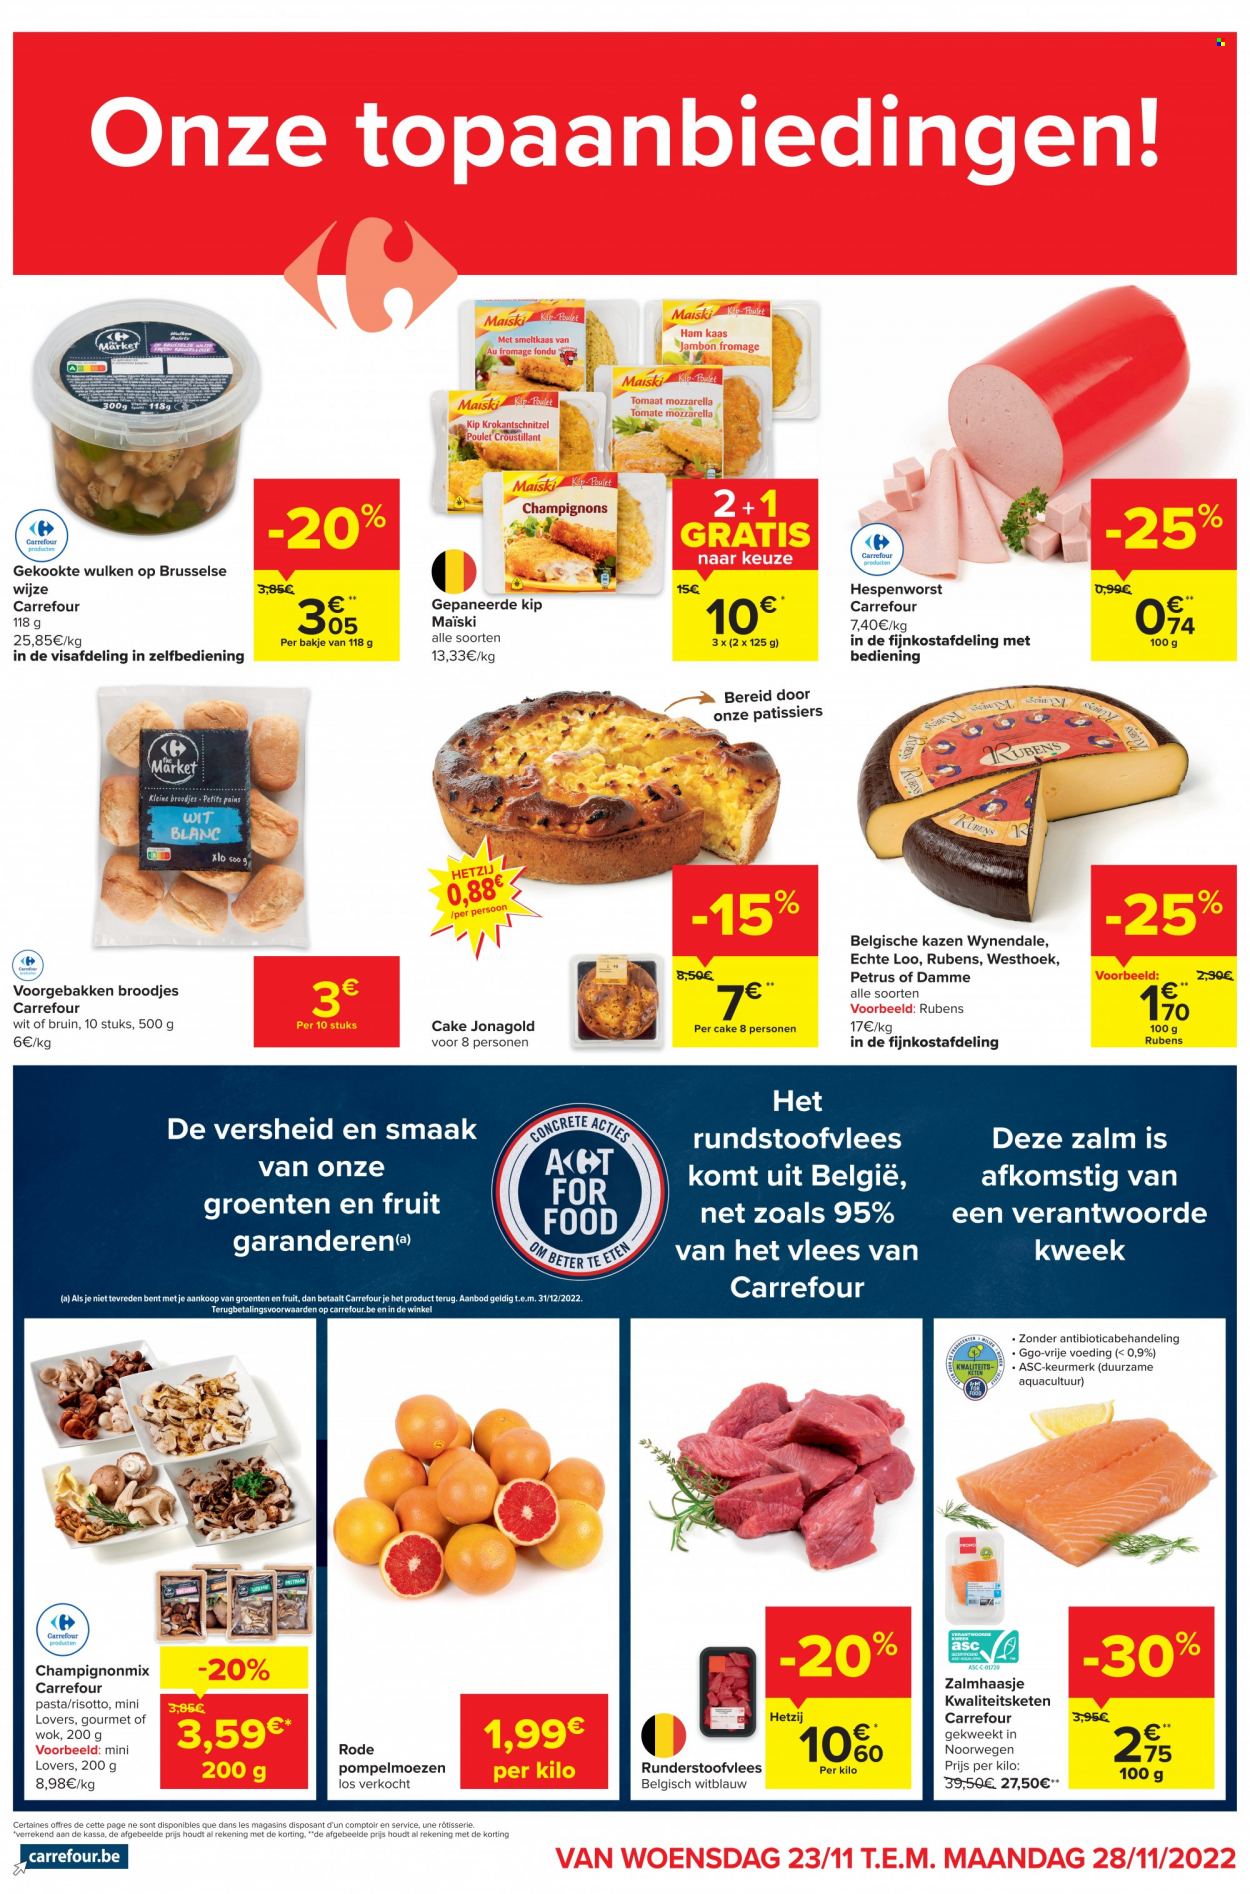 thumbnail - Carrefour-aanbieding - 23/11/2022 - 28/11/2022 -  producten in de aanbieding - broodje, zalm, gepaneerde kip, risotto, pasta. Pagina 1.